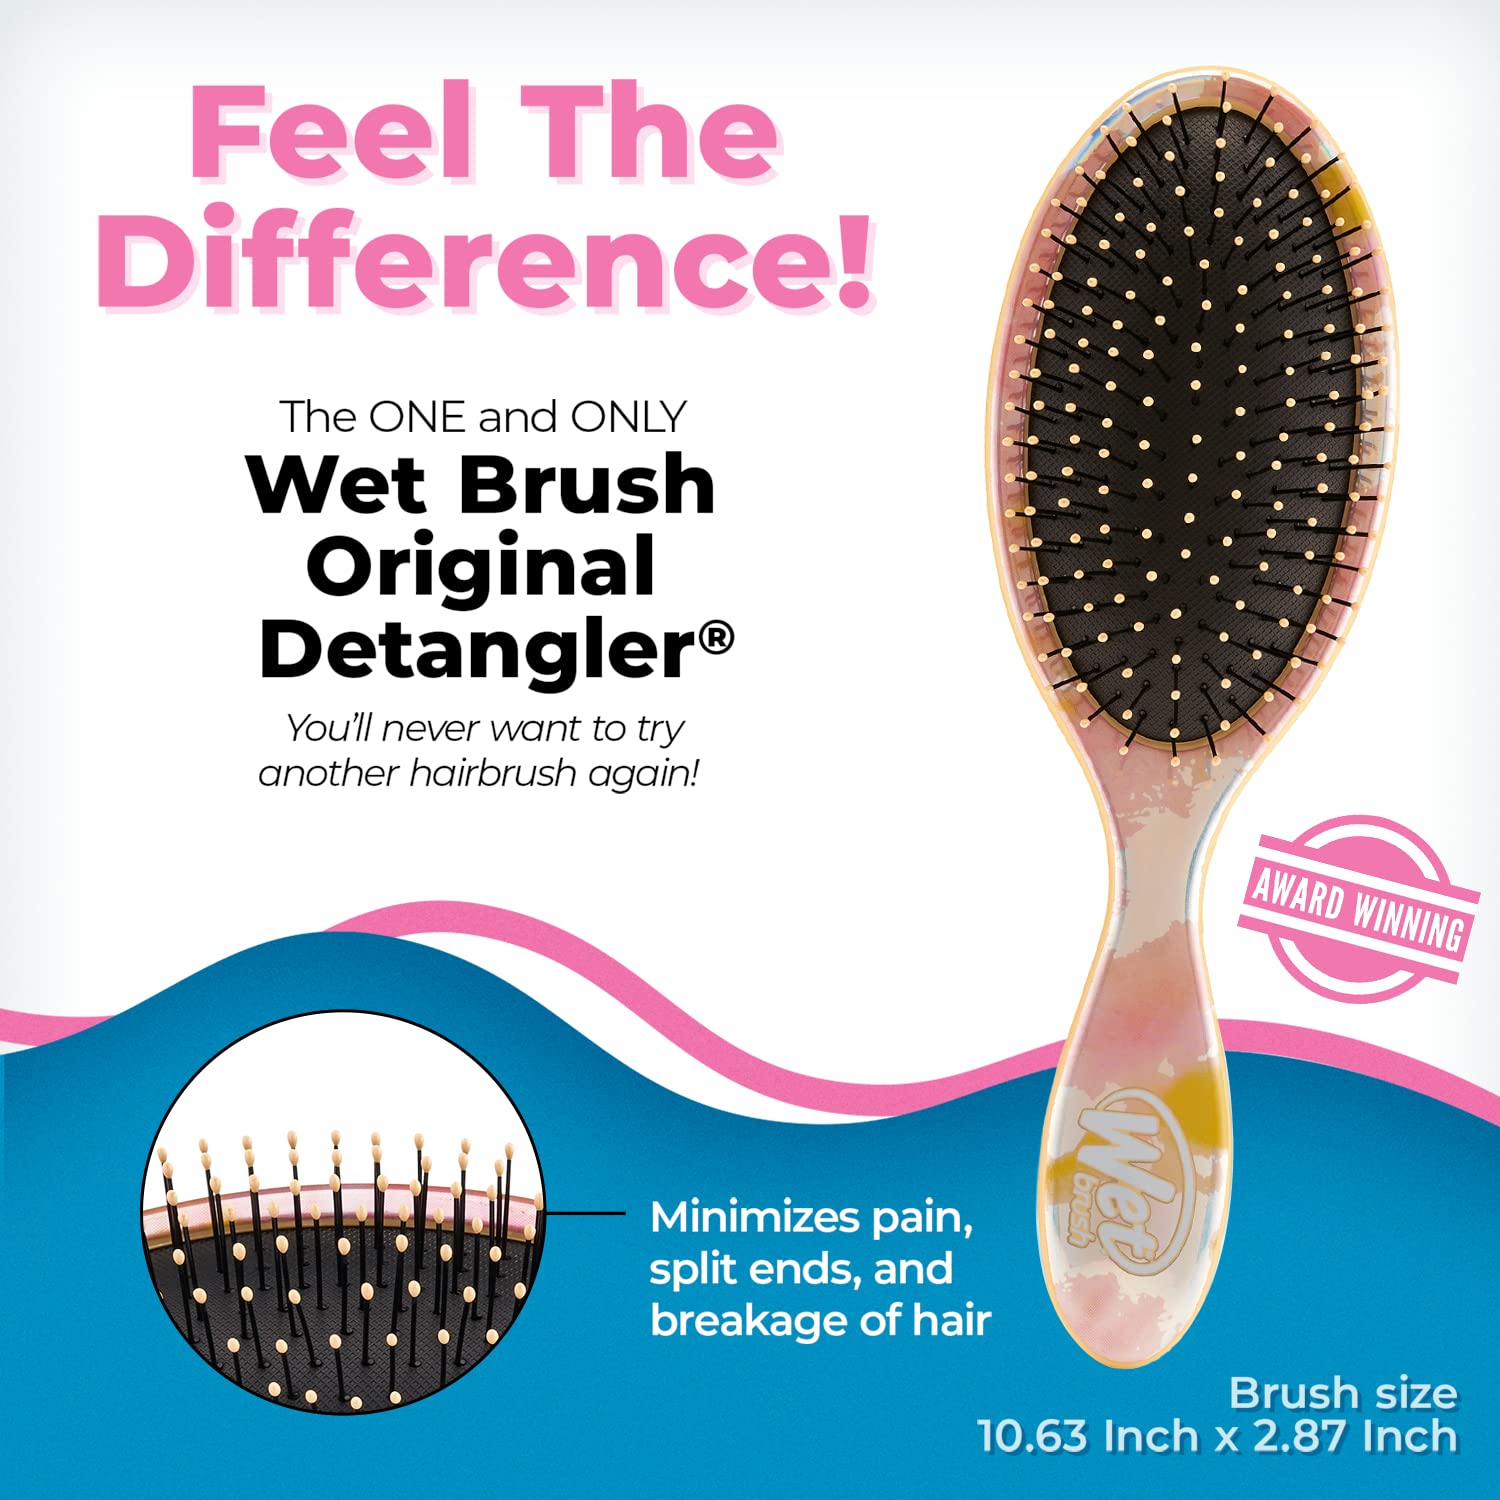 Wet Brush Original Detangler Brush - Tie Dye, Peach - All Hair Types - Ultra-Soft IntelliFlex Bristles Glide Through Tangles with Ease - Pain-Free Comb for Men, Women, Boys and Girls